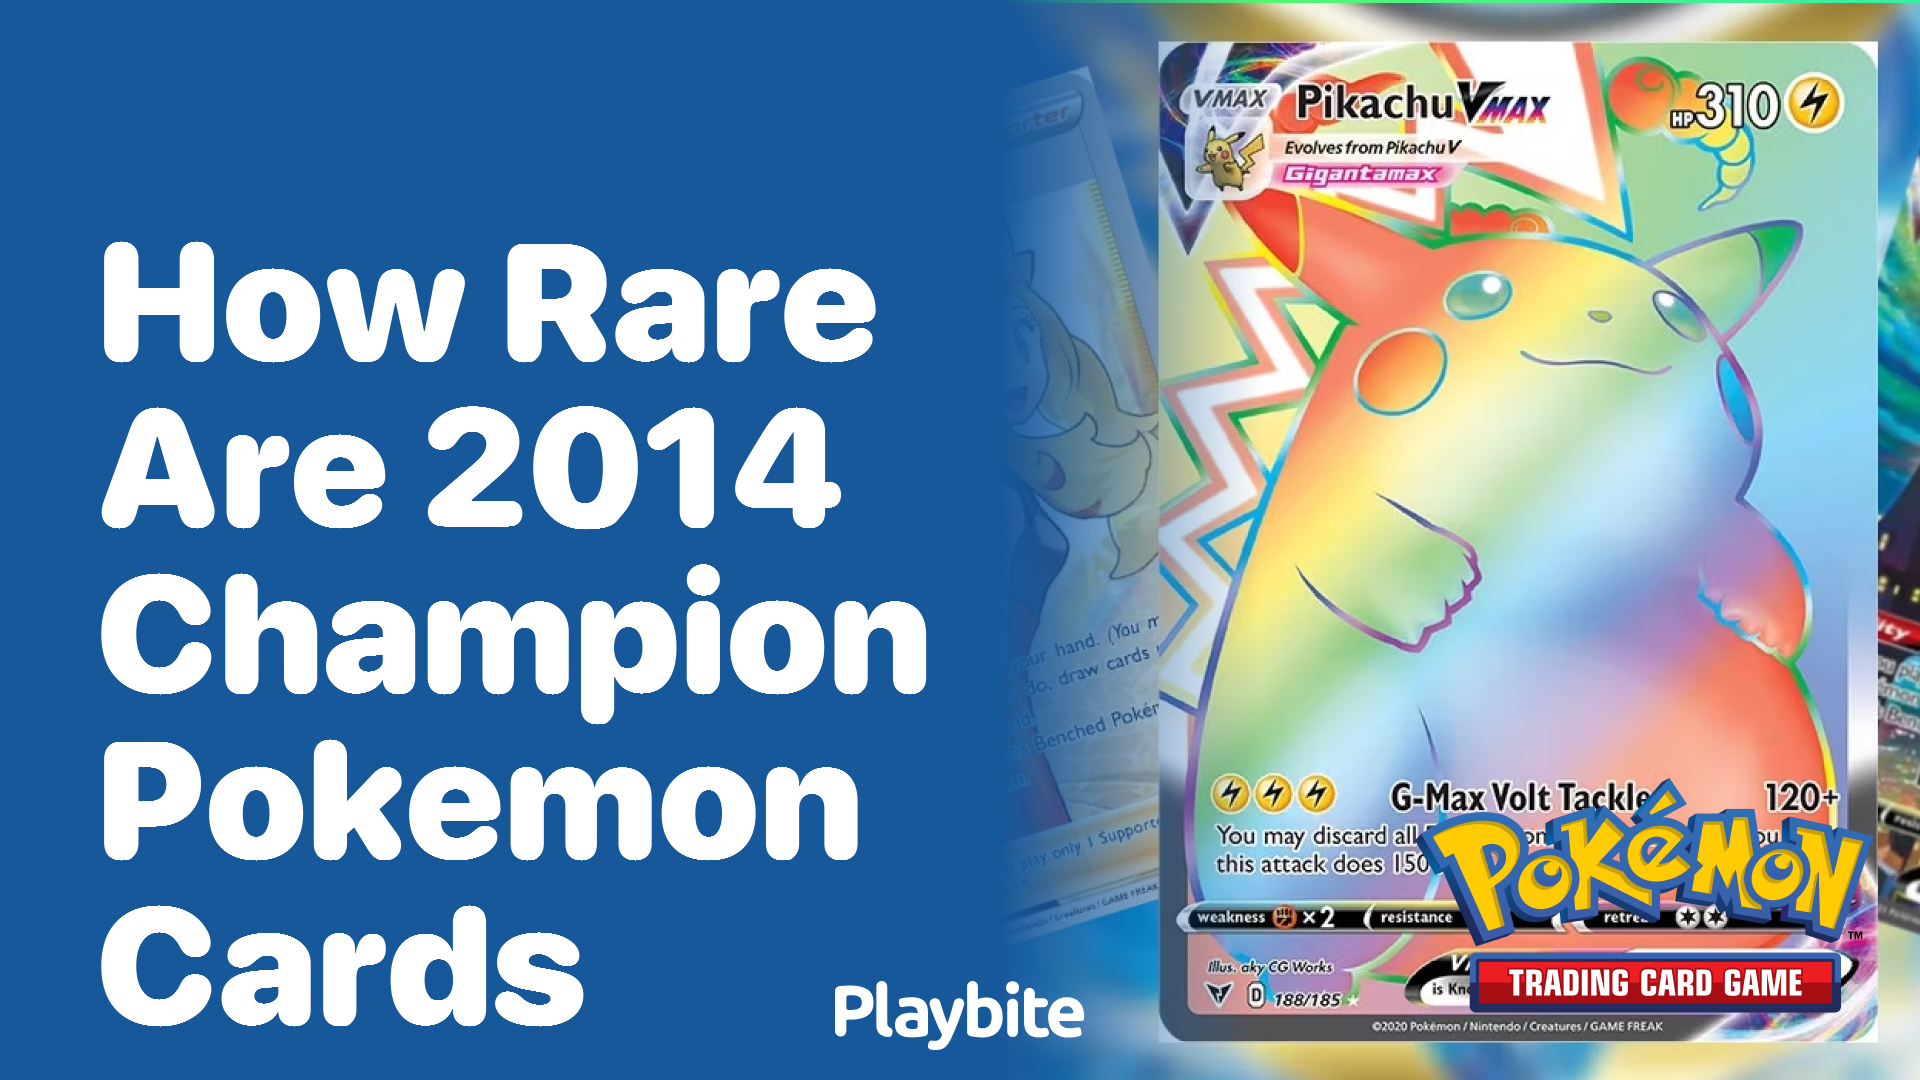 How rare are 2014 Champion Pokemon Cards?